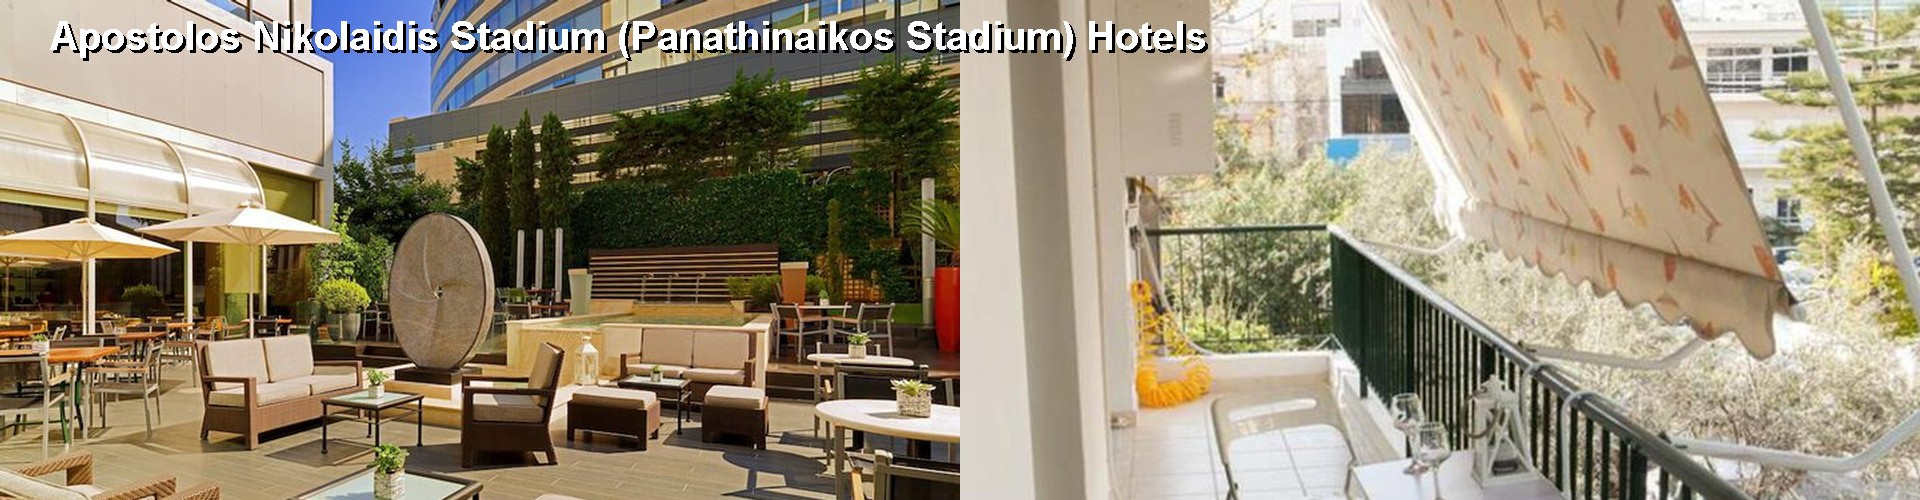 5 Best Hotels near Apostolos Nikolaidis Stadium (Panathinaikos Stadium)